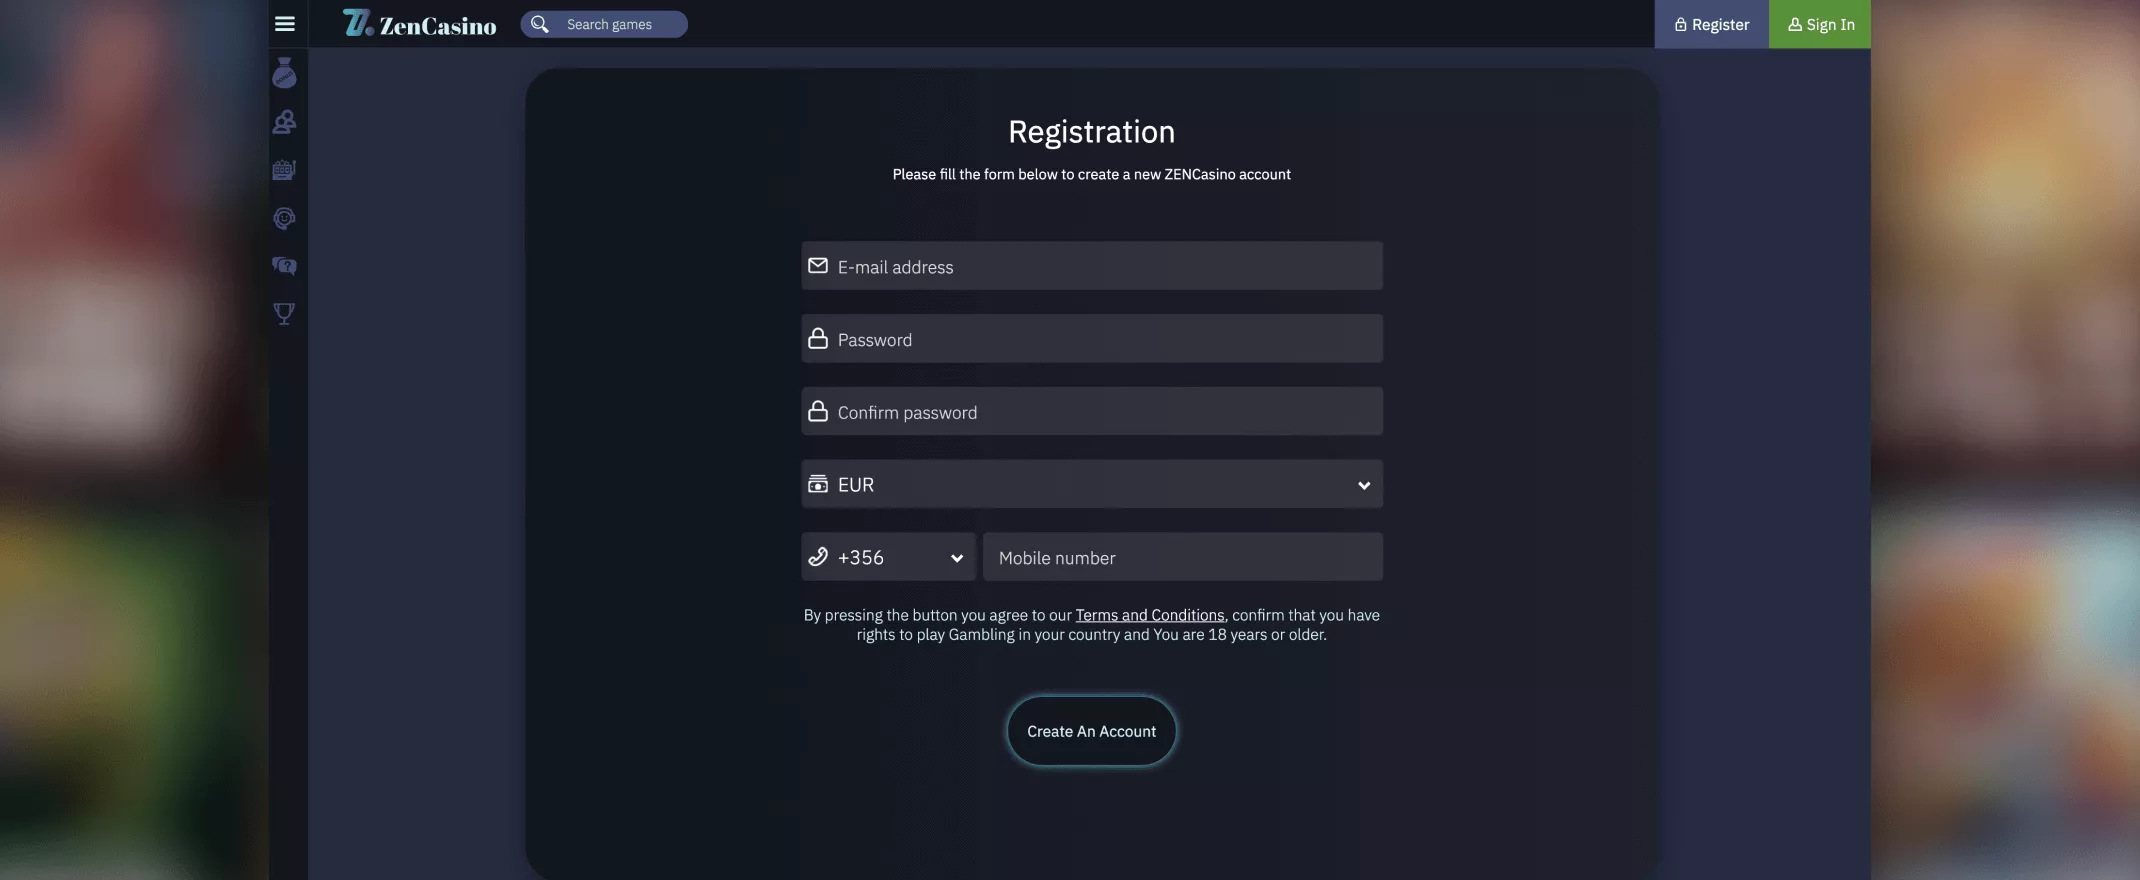 ZenCasino registration screenshot